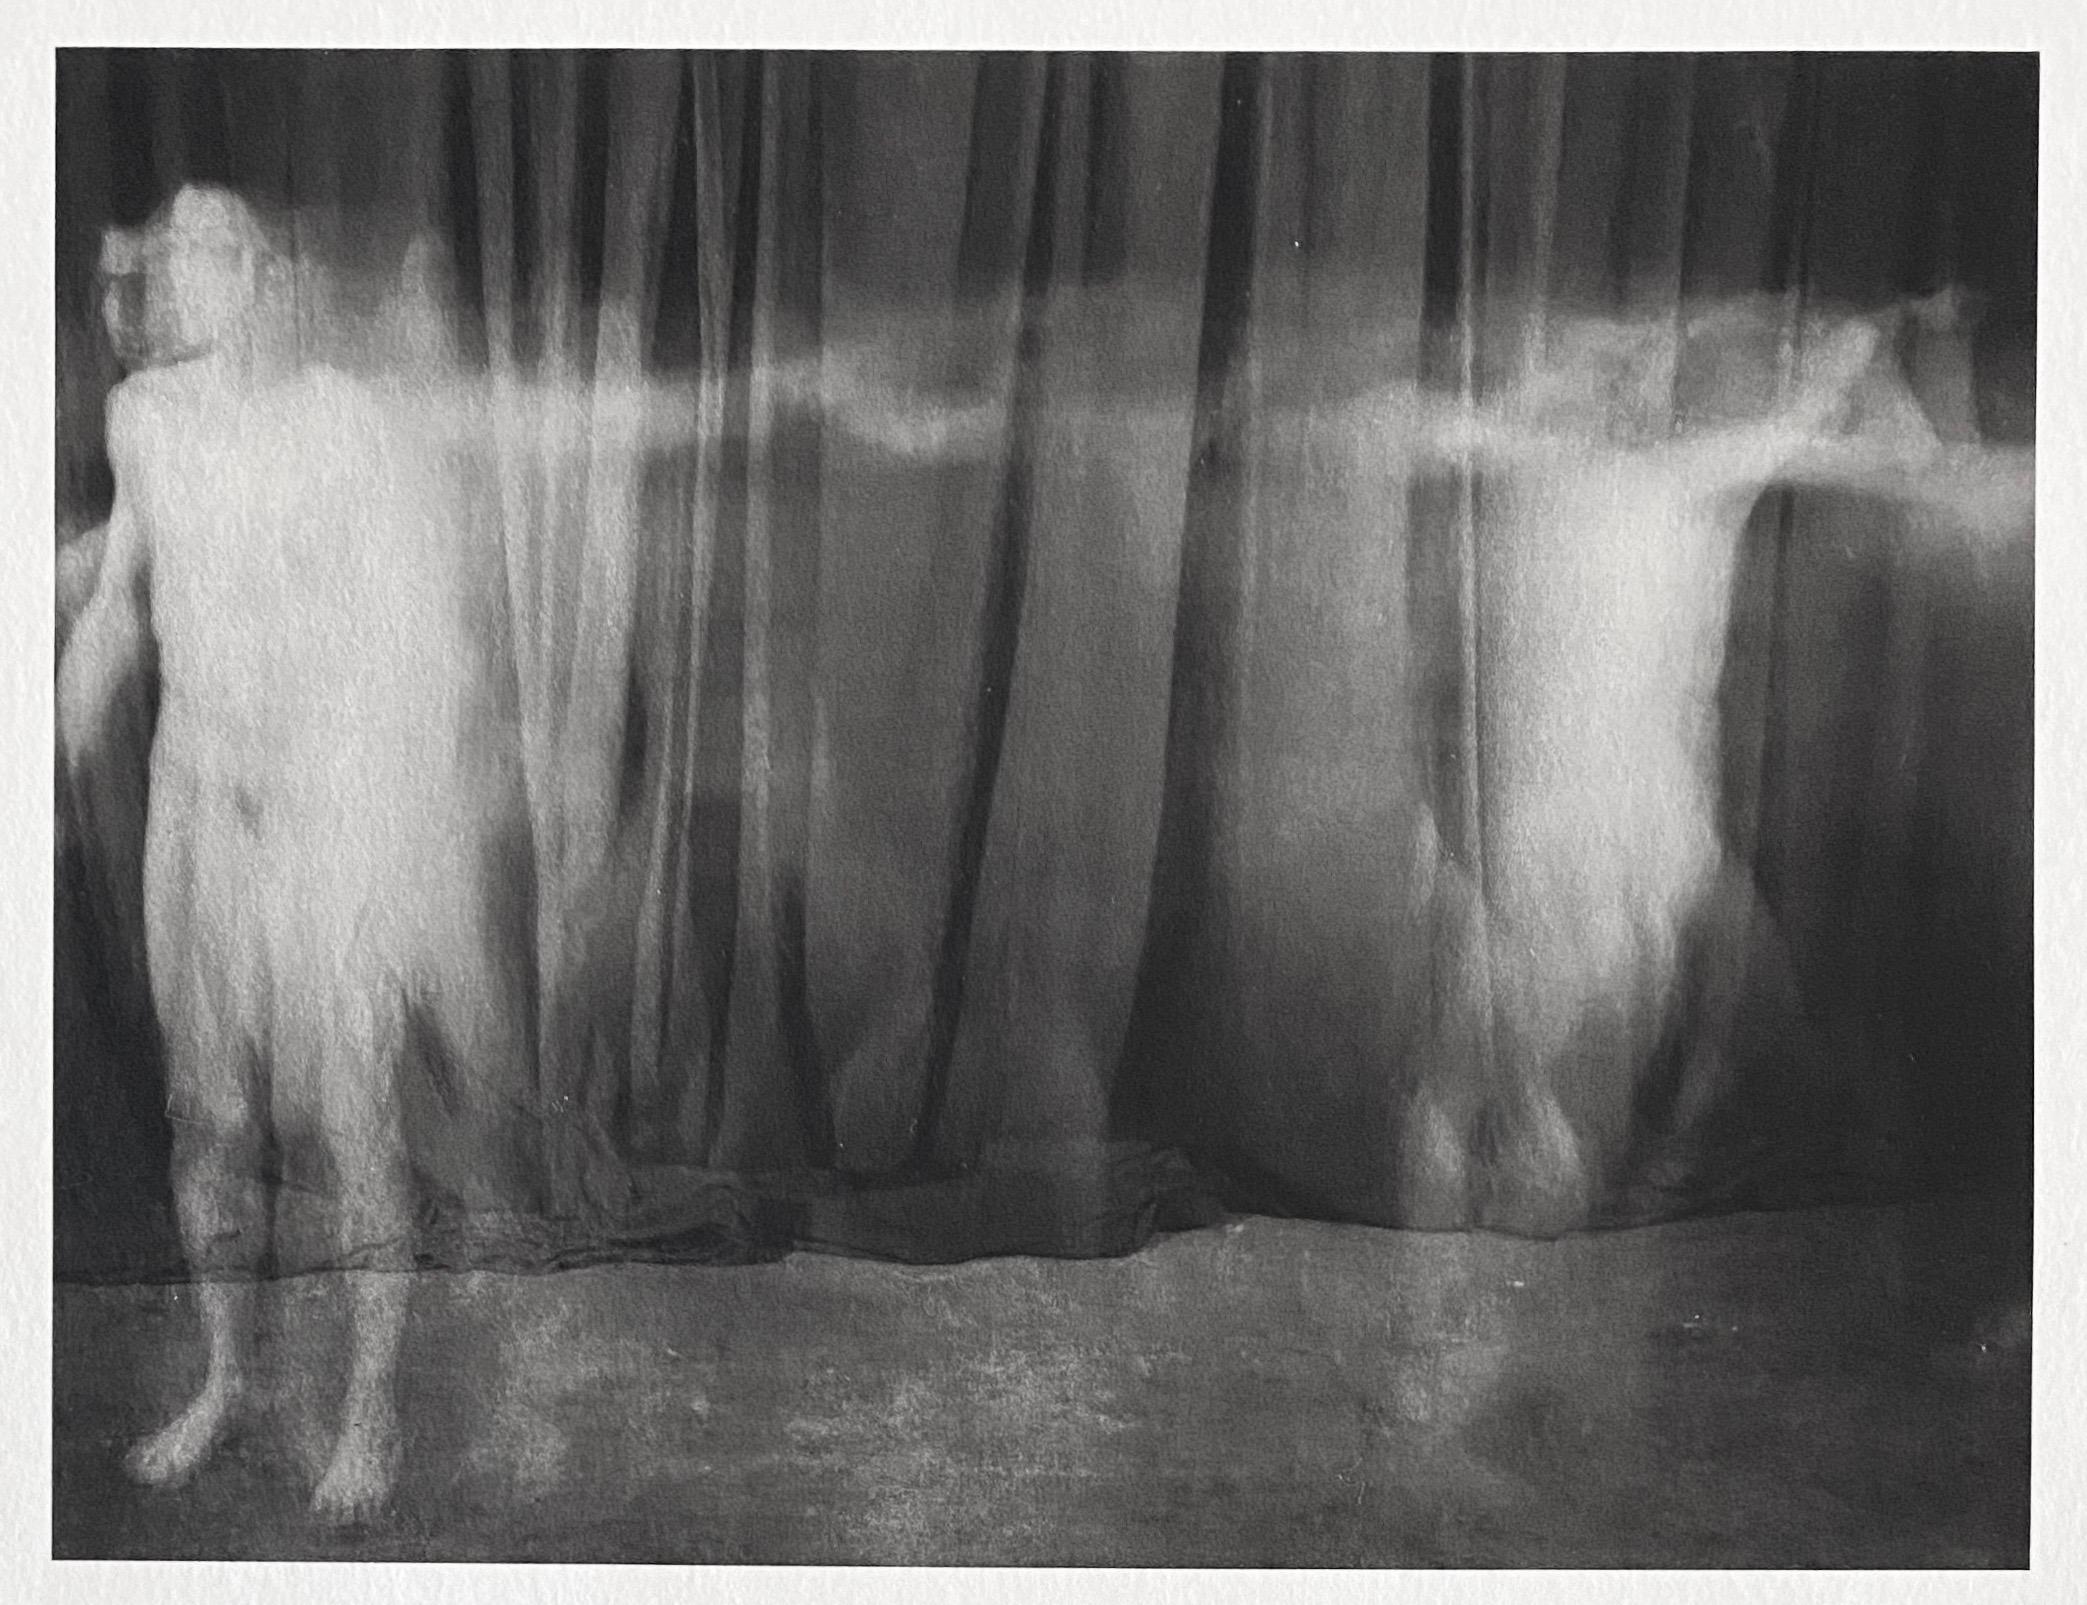 Nude Photograph Skip Arnold - Photographie vintage d'homme nu en platine imprimé 'Ring Around the Rosie' 